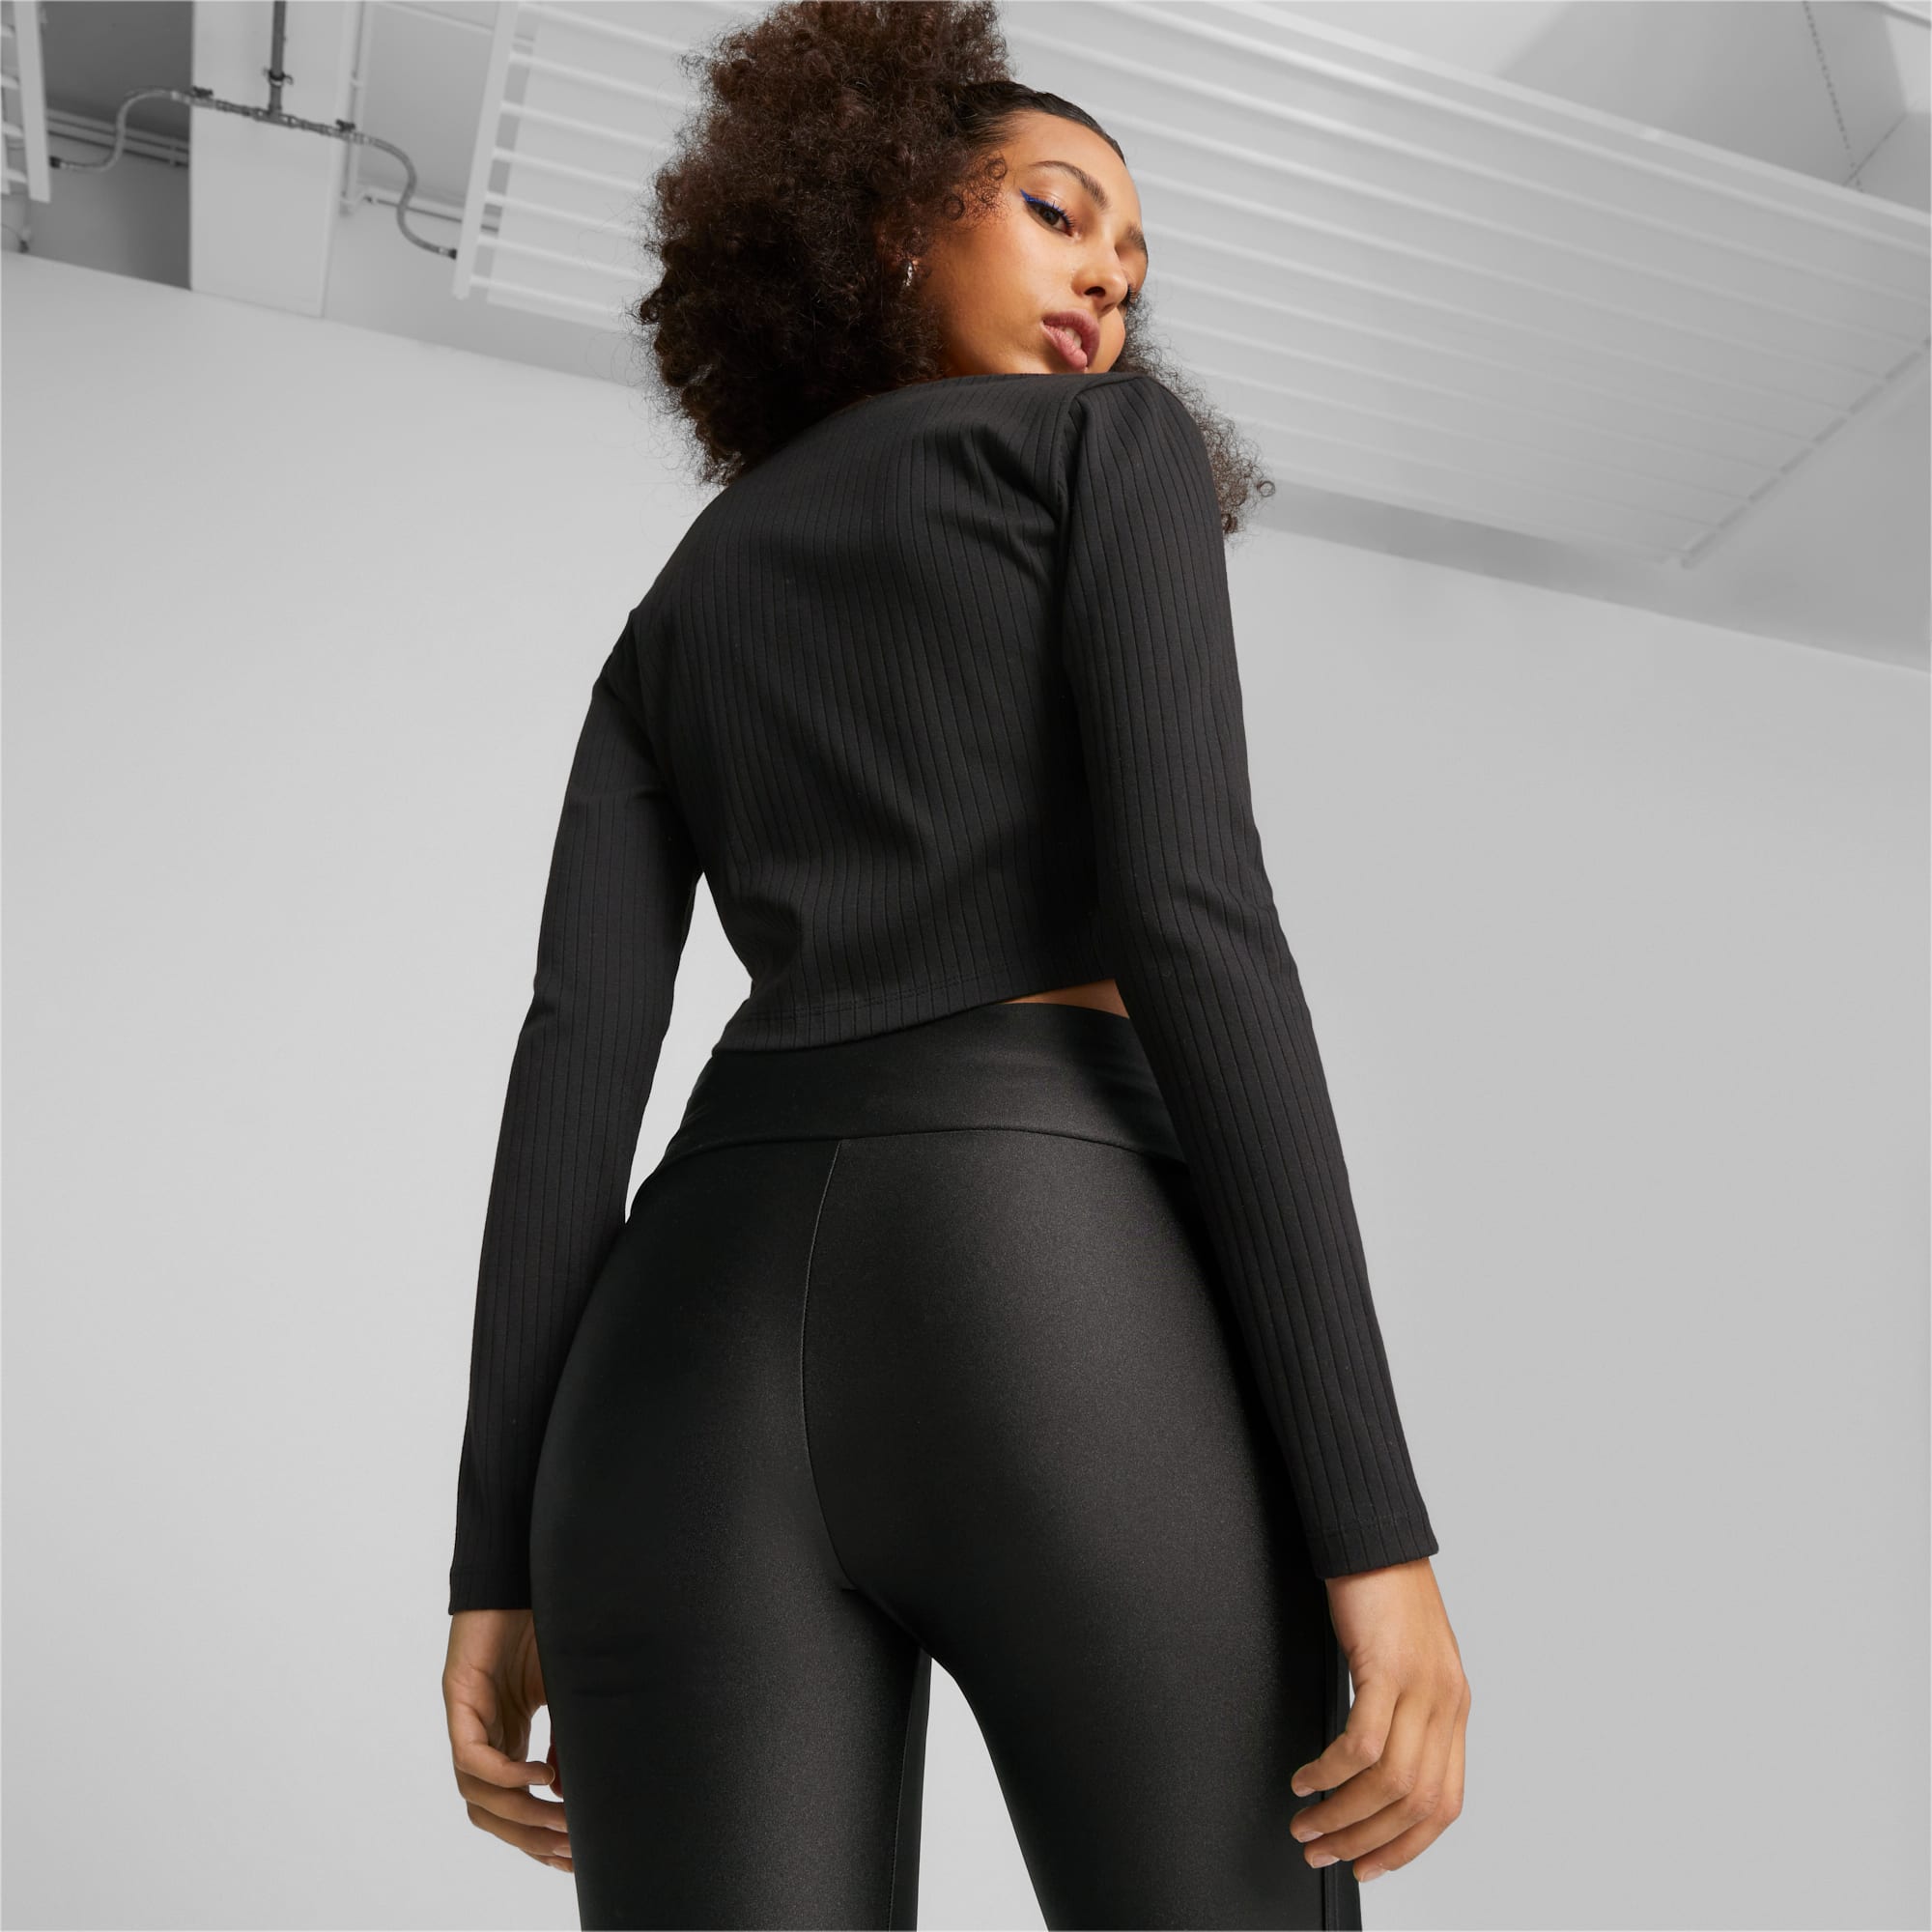 PUMA Classics Women's Ribbed Long Sleeve Shirt, Black, Size M, Clothing